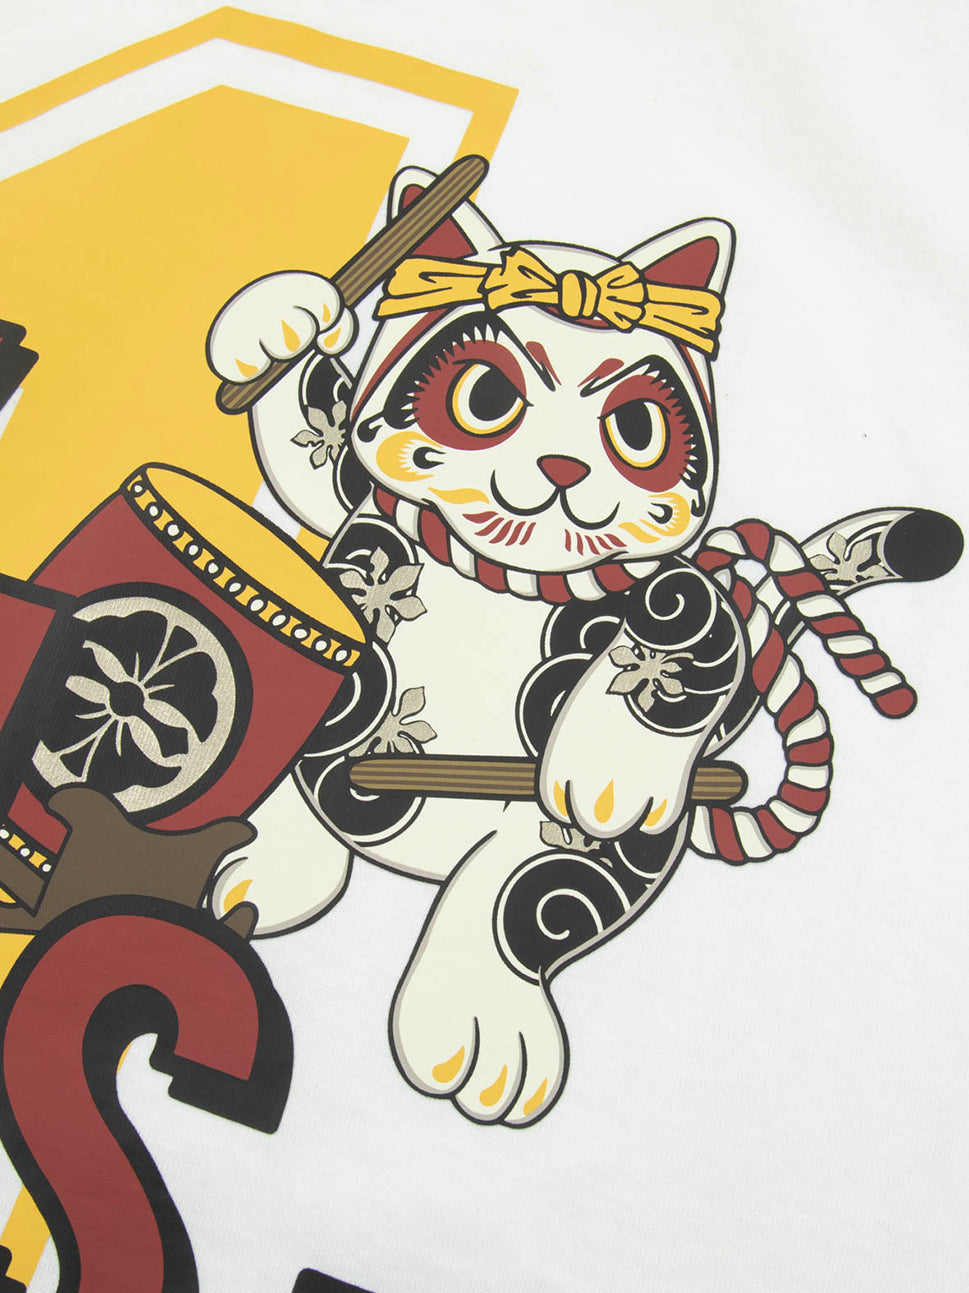 Evisu Off White HT No. 1 Daruma & Fortune Cat Printed SS Tee